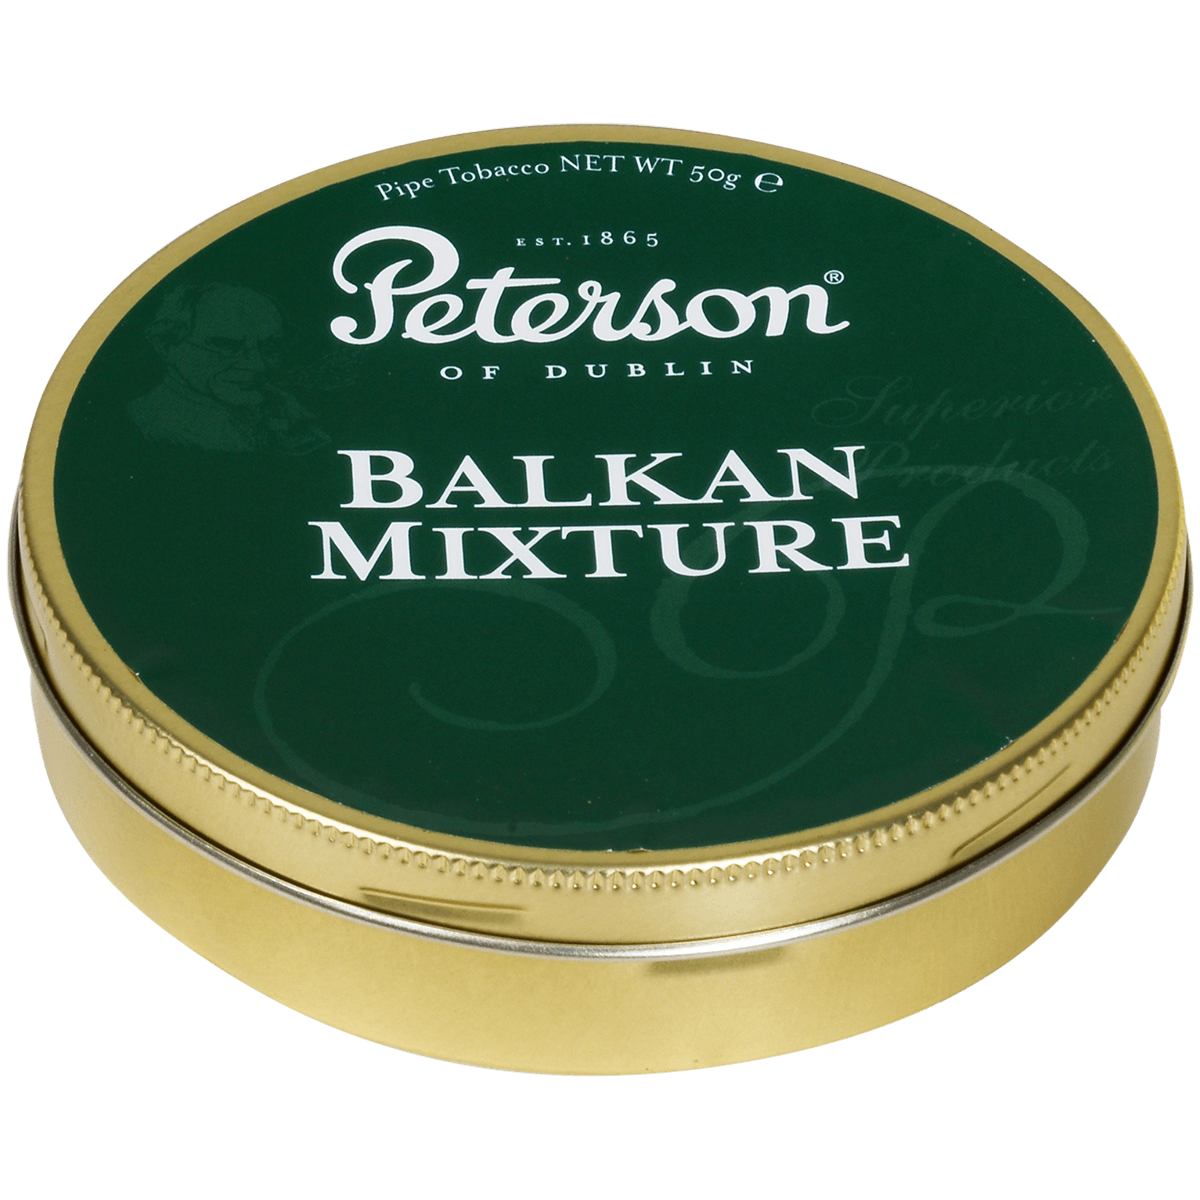 Peterson of Dublin Balkan Mixture 50 gram tin